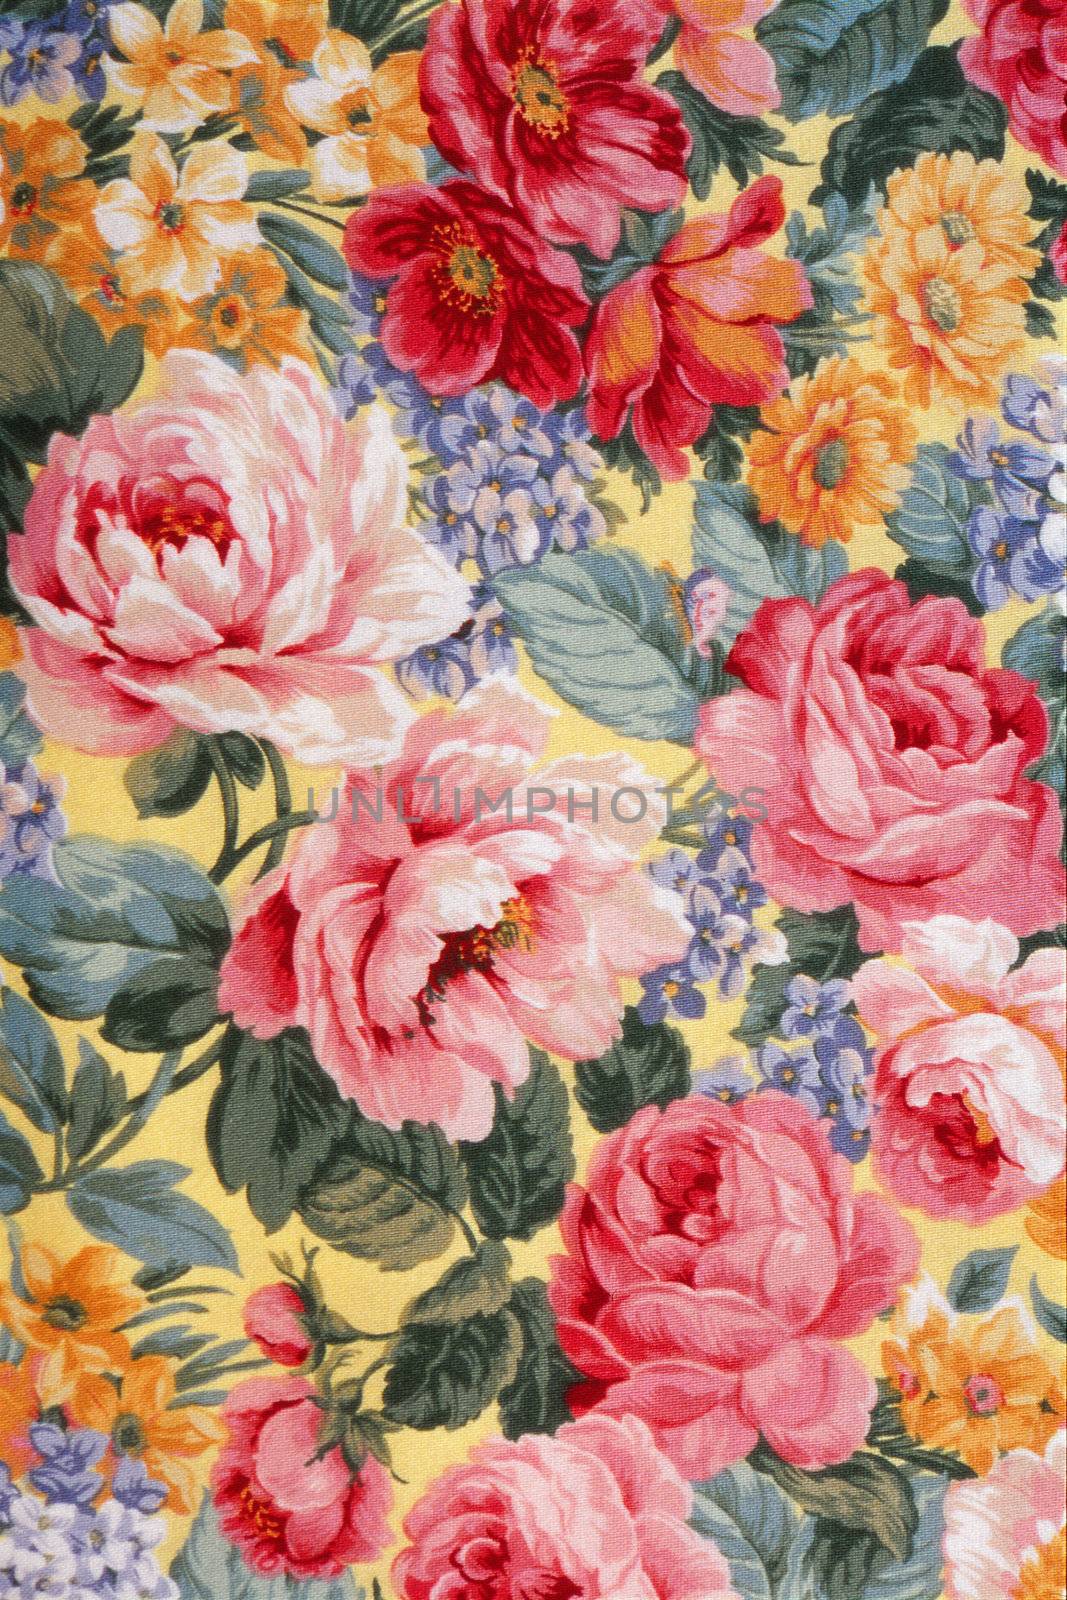 Floral Fabric 01 by bonathos